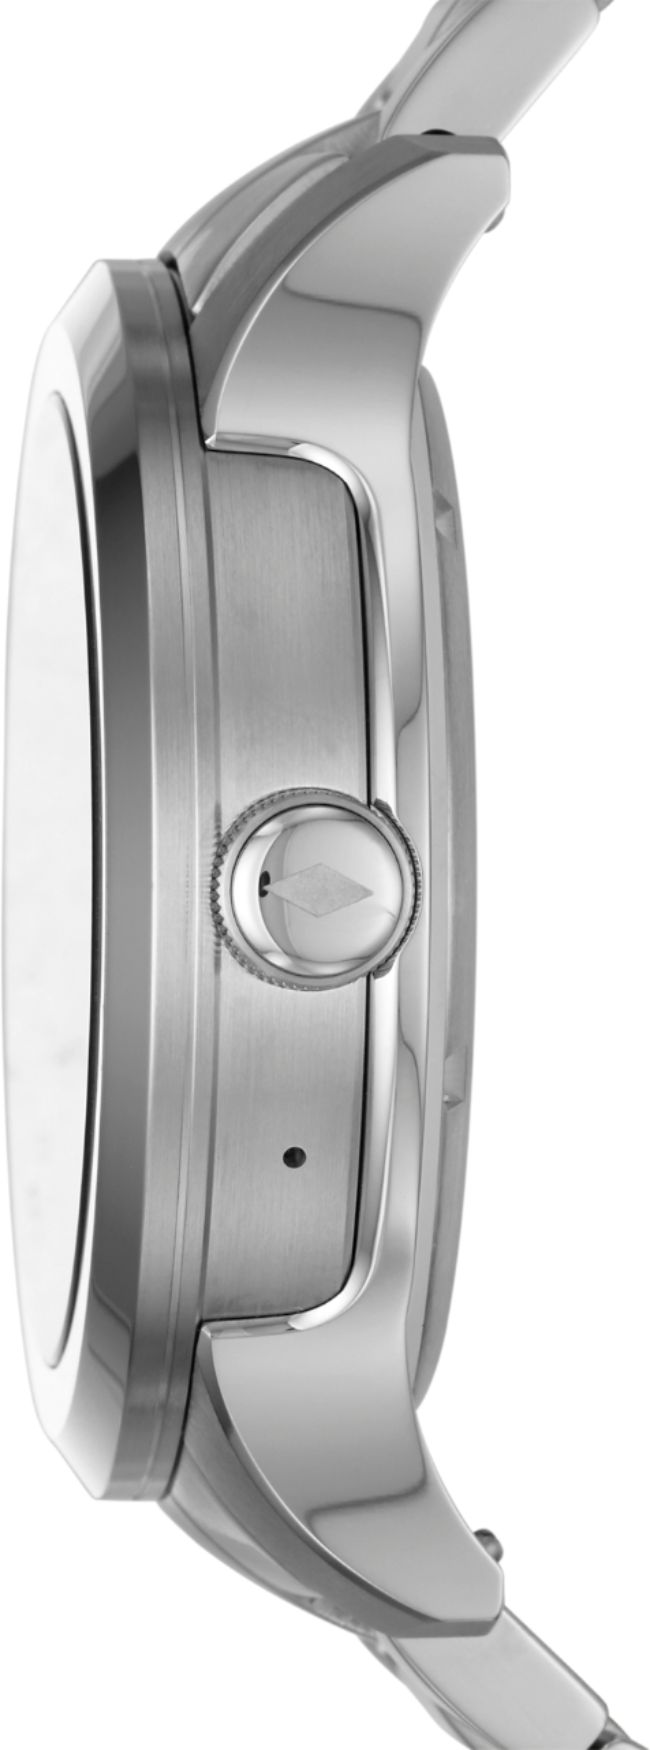 Fossil Q Founder Gen 2 Smartwatch 46mm Stainless Steel Black/Gray FTW2117 -  Best Buy